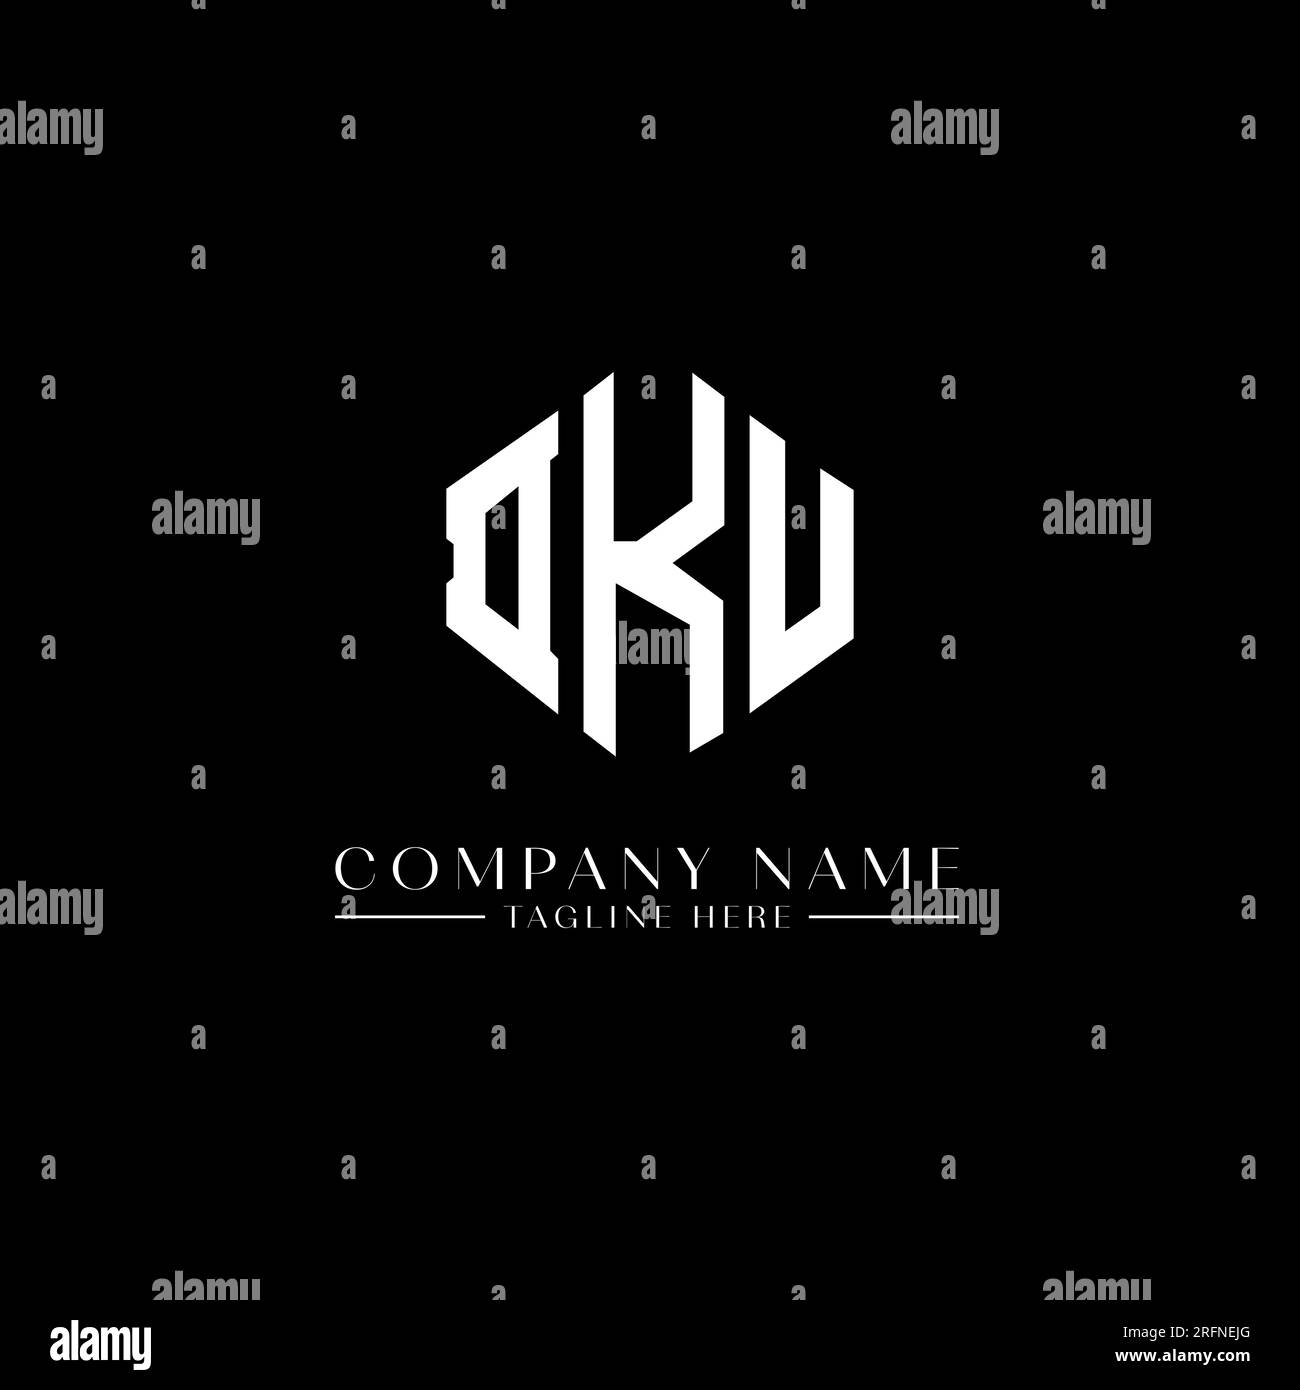 Dku logo Black and White Stock Photos & Images - Alamy